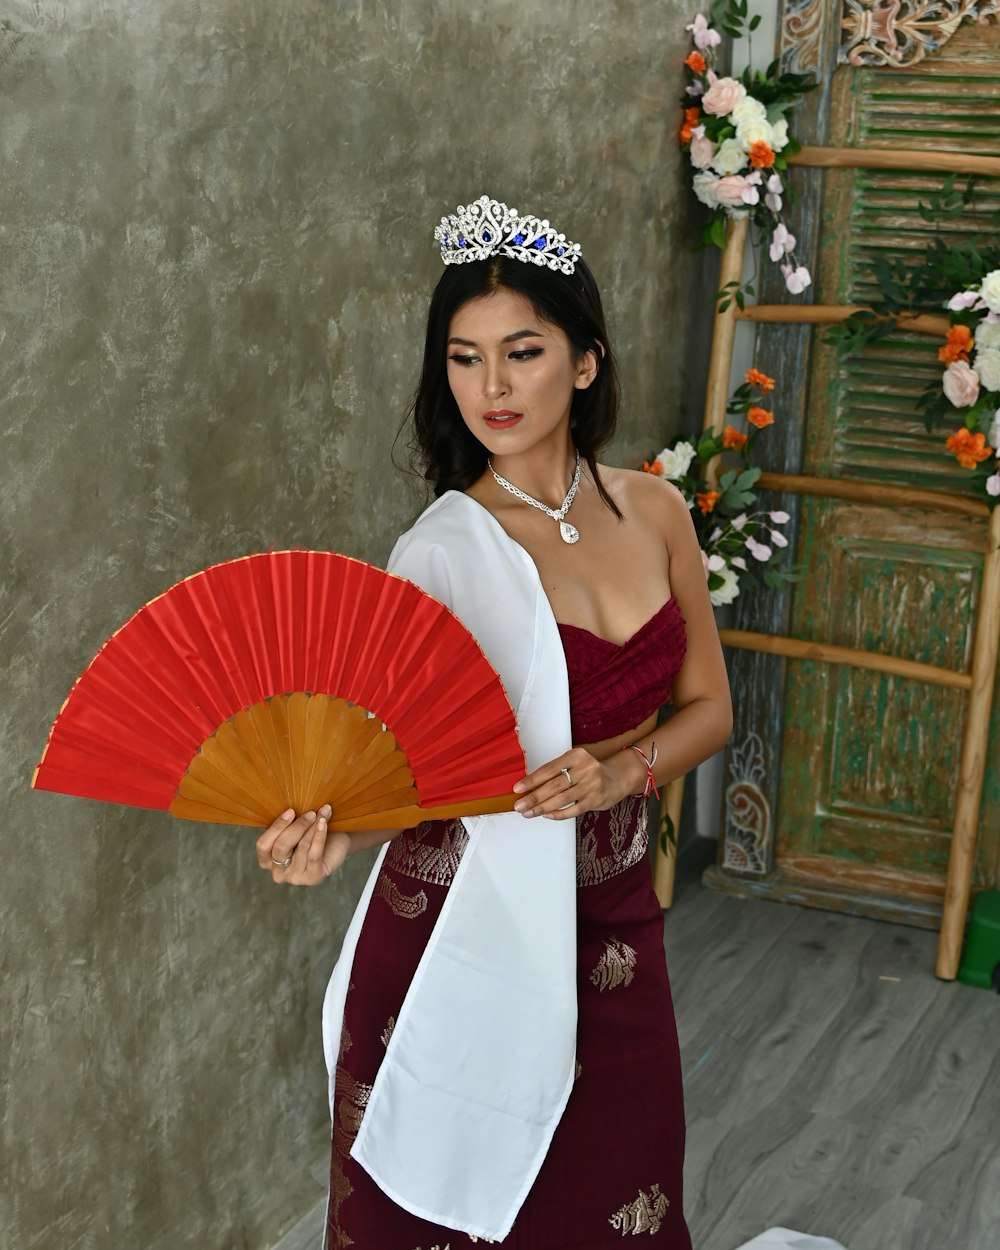 a woman wearing a tiara holding a red fan